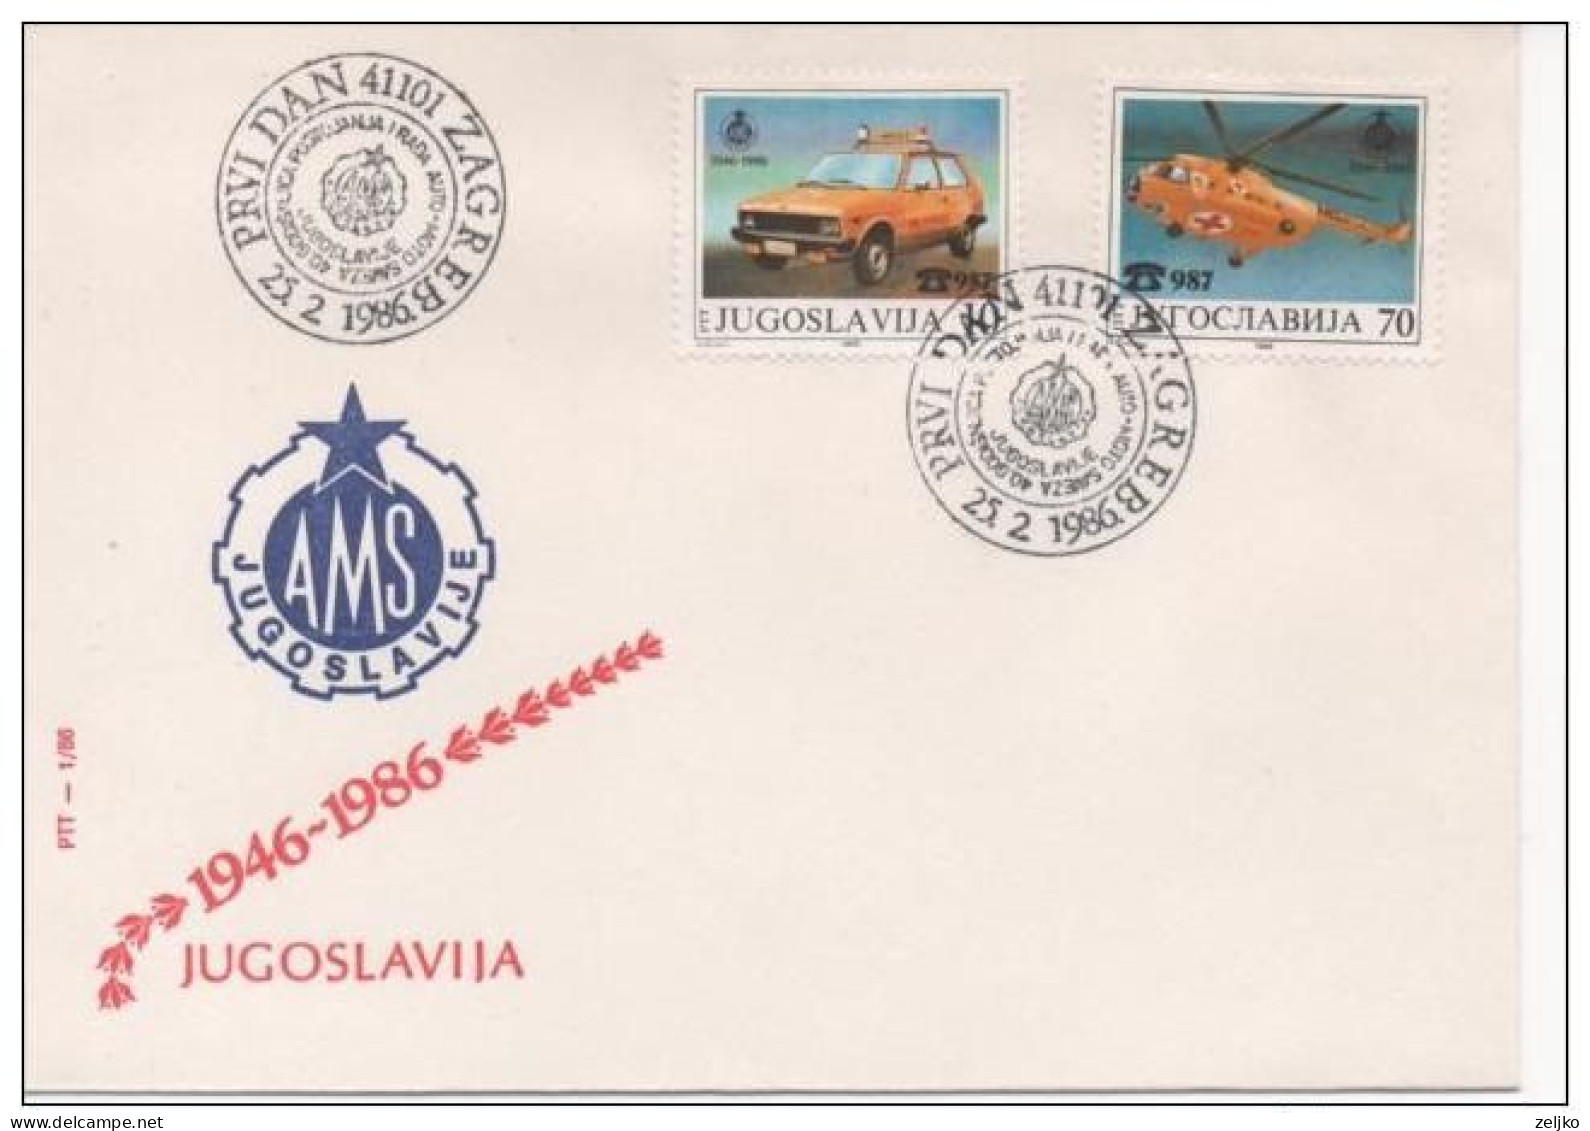 Yugoslavia, 1986, FDC,, 40th Anniversary Of Yugoslav Auto And Motor Club, Car, Helicopter, Cancel Zagreb - FDC